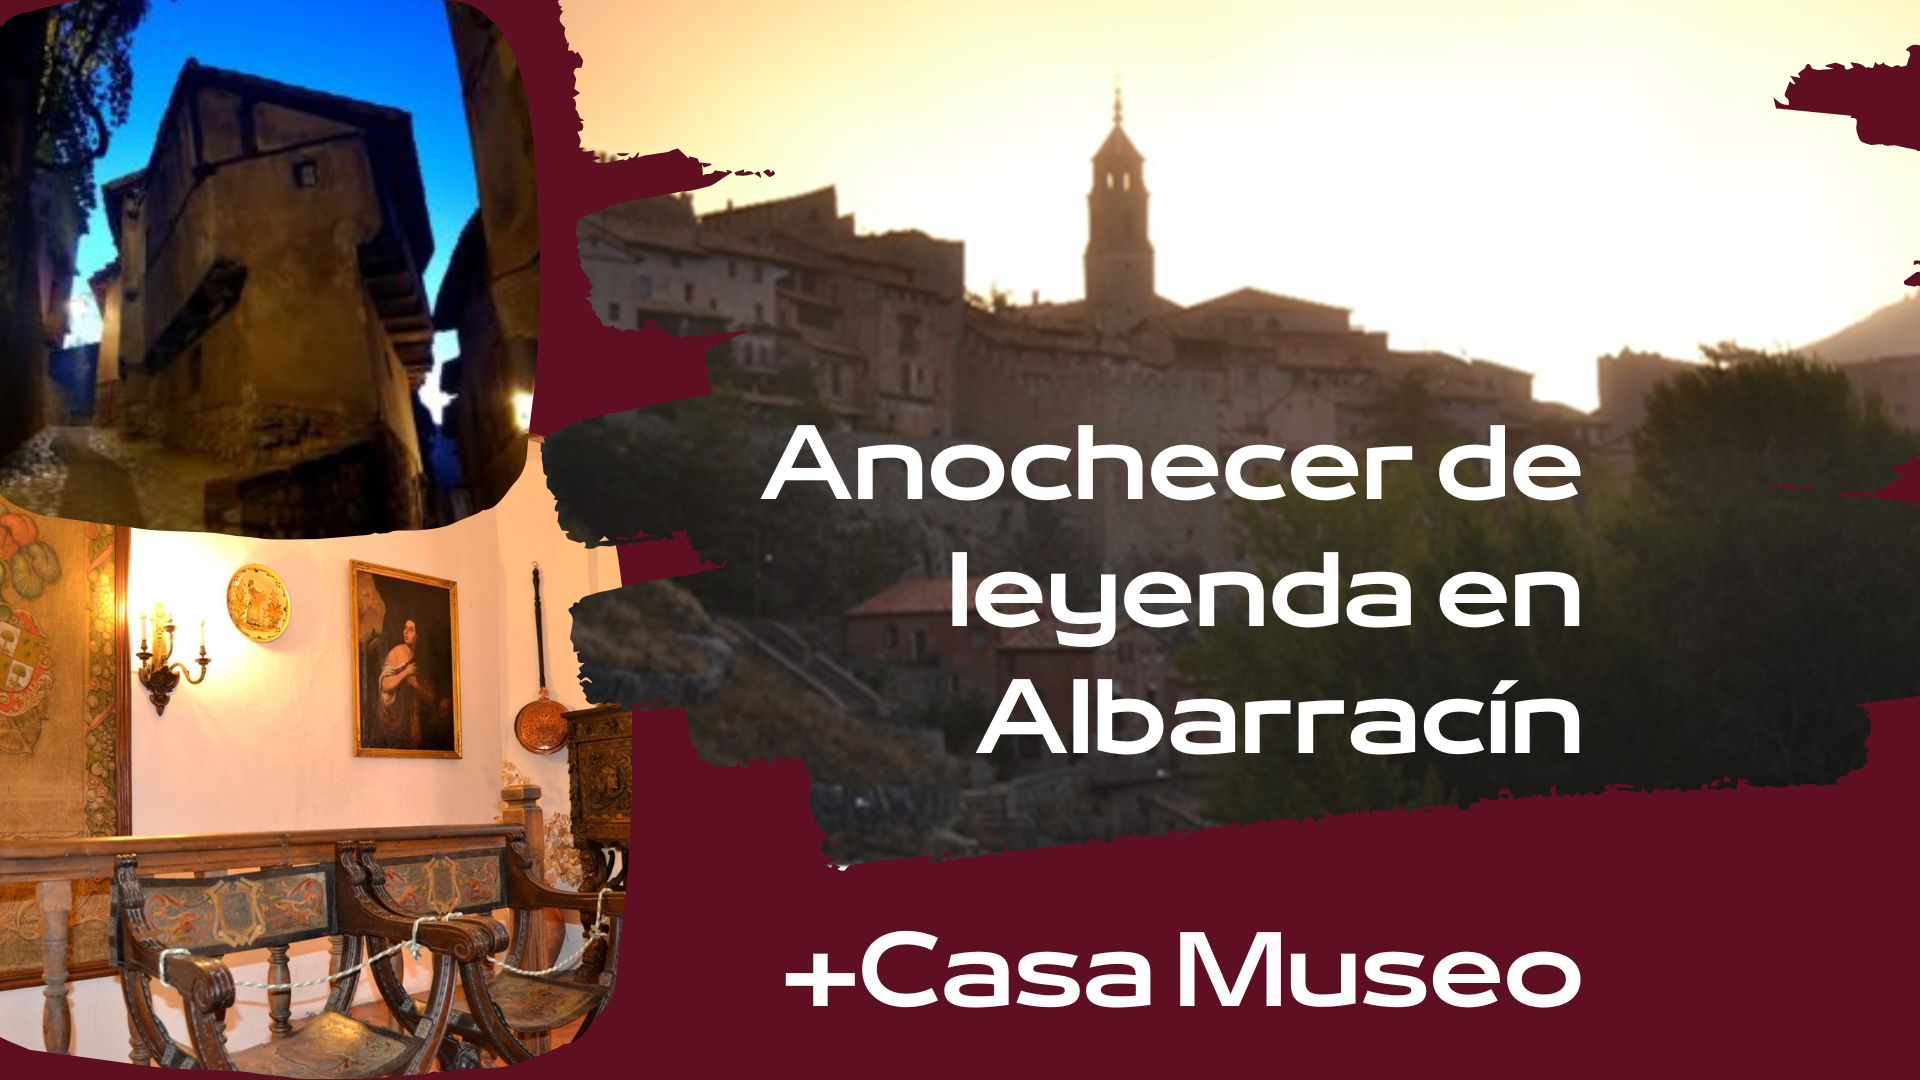 Anochecer de Leyendas en Albarracín + Casa Museo de visita guiada. Reserva tu plaza!